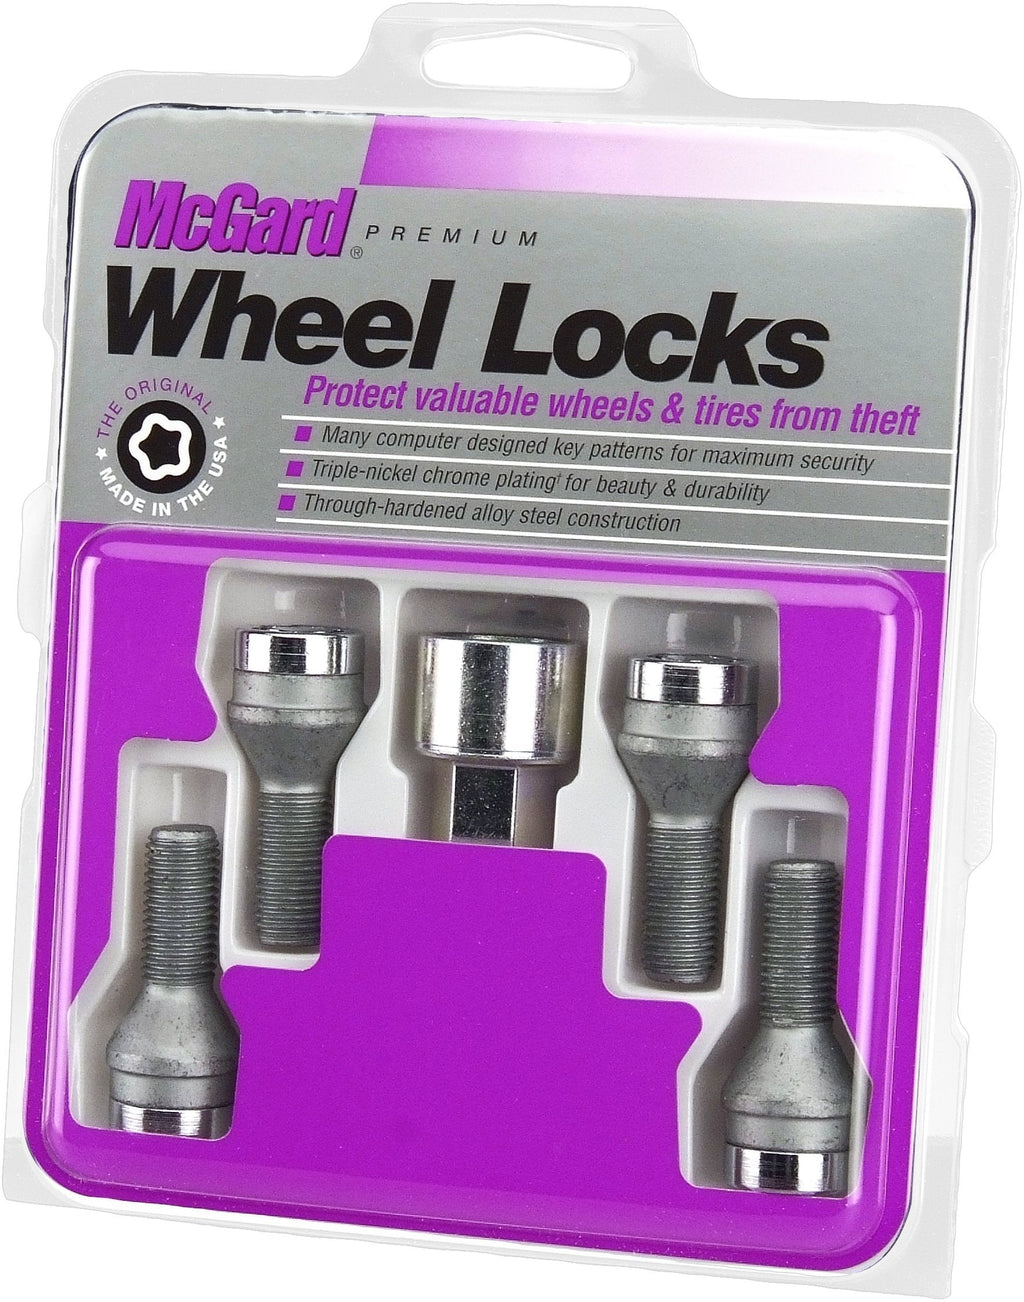  [AUSTRALIA] - McGard 27000 Chrome Bolt Style Cone Seat Wheel Locks (M14 x 1.5 Thread Size) - Set of 4